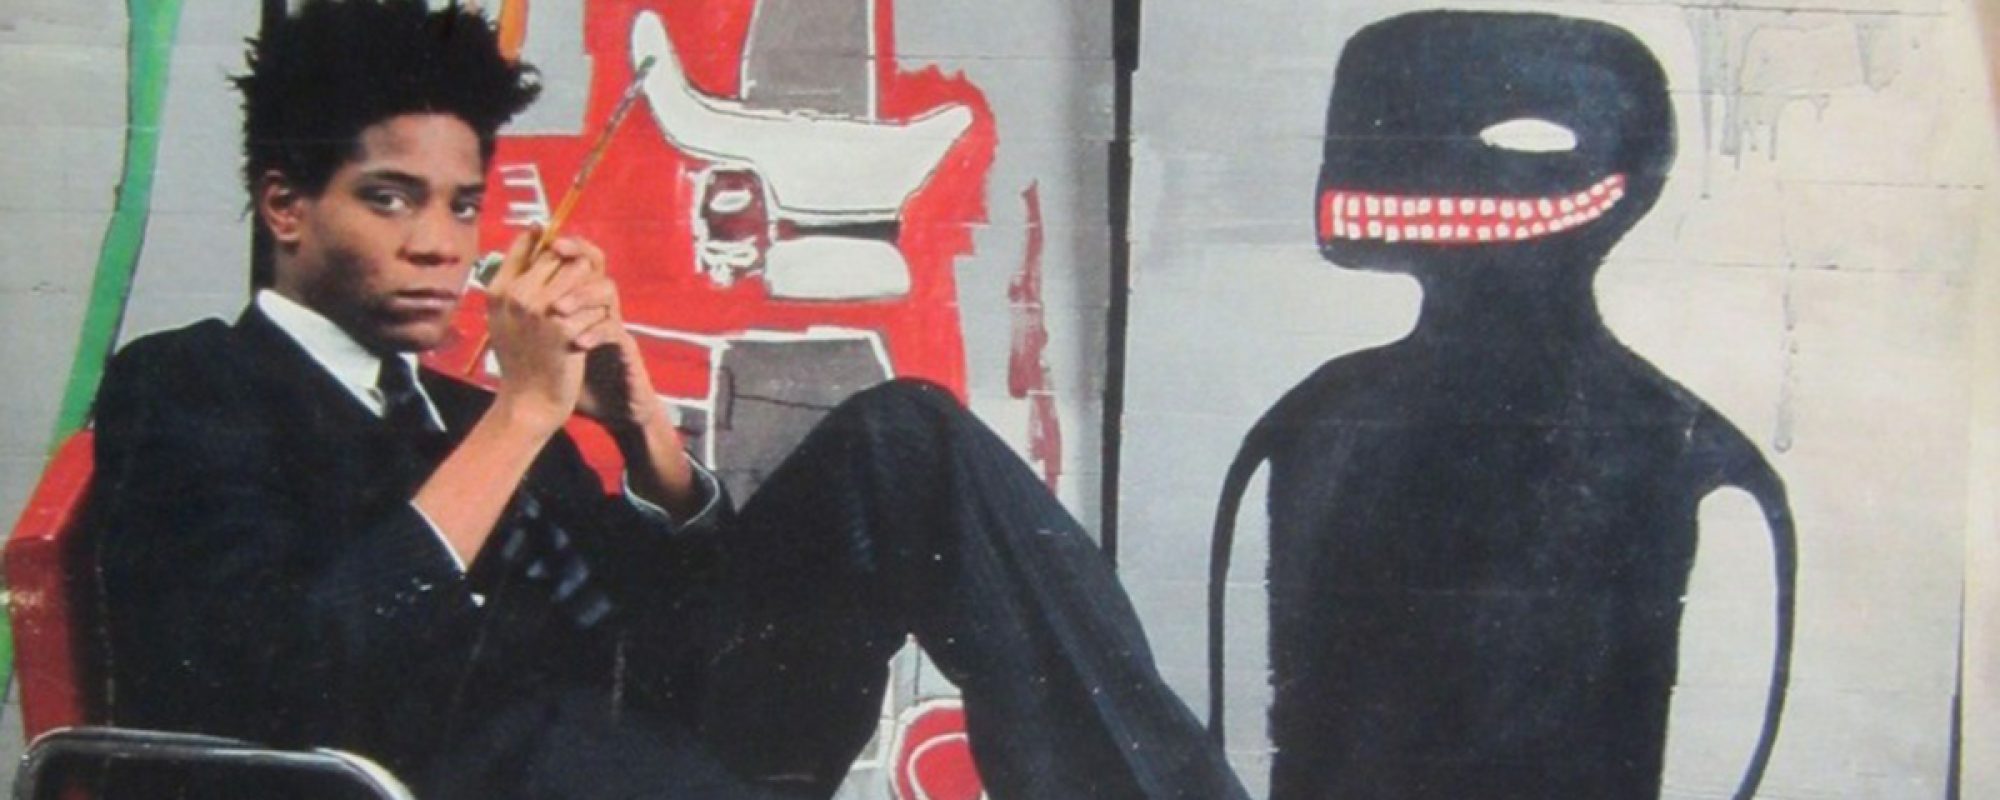 Jean-Michel Basquiat: Artist Profile